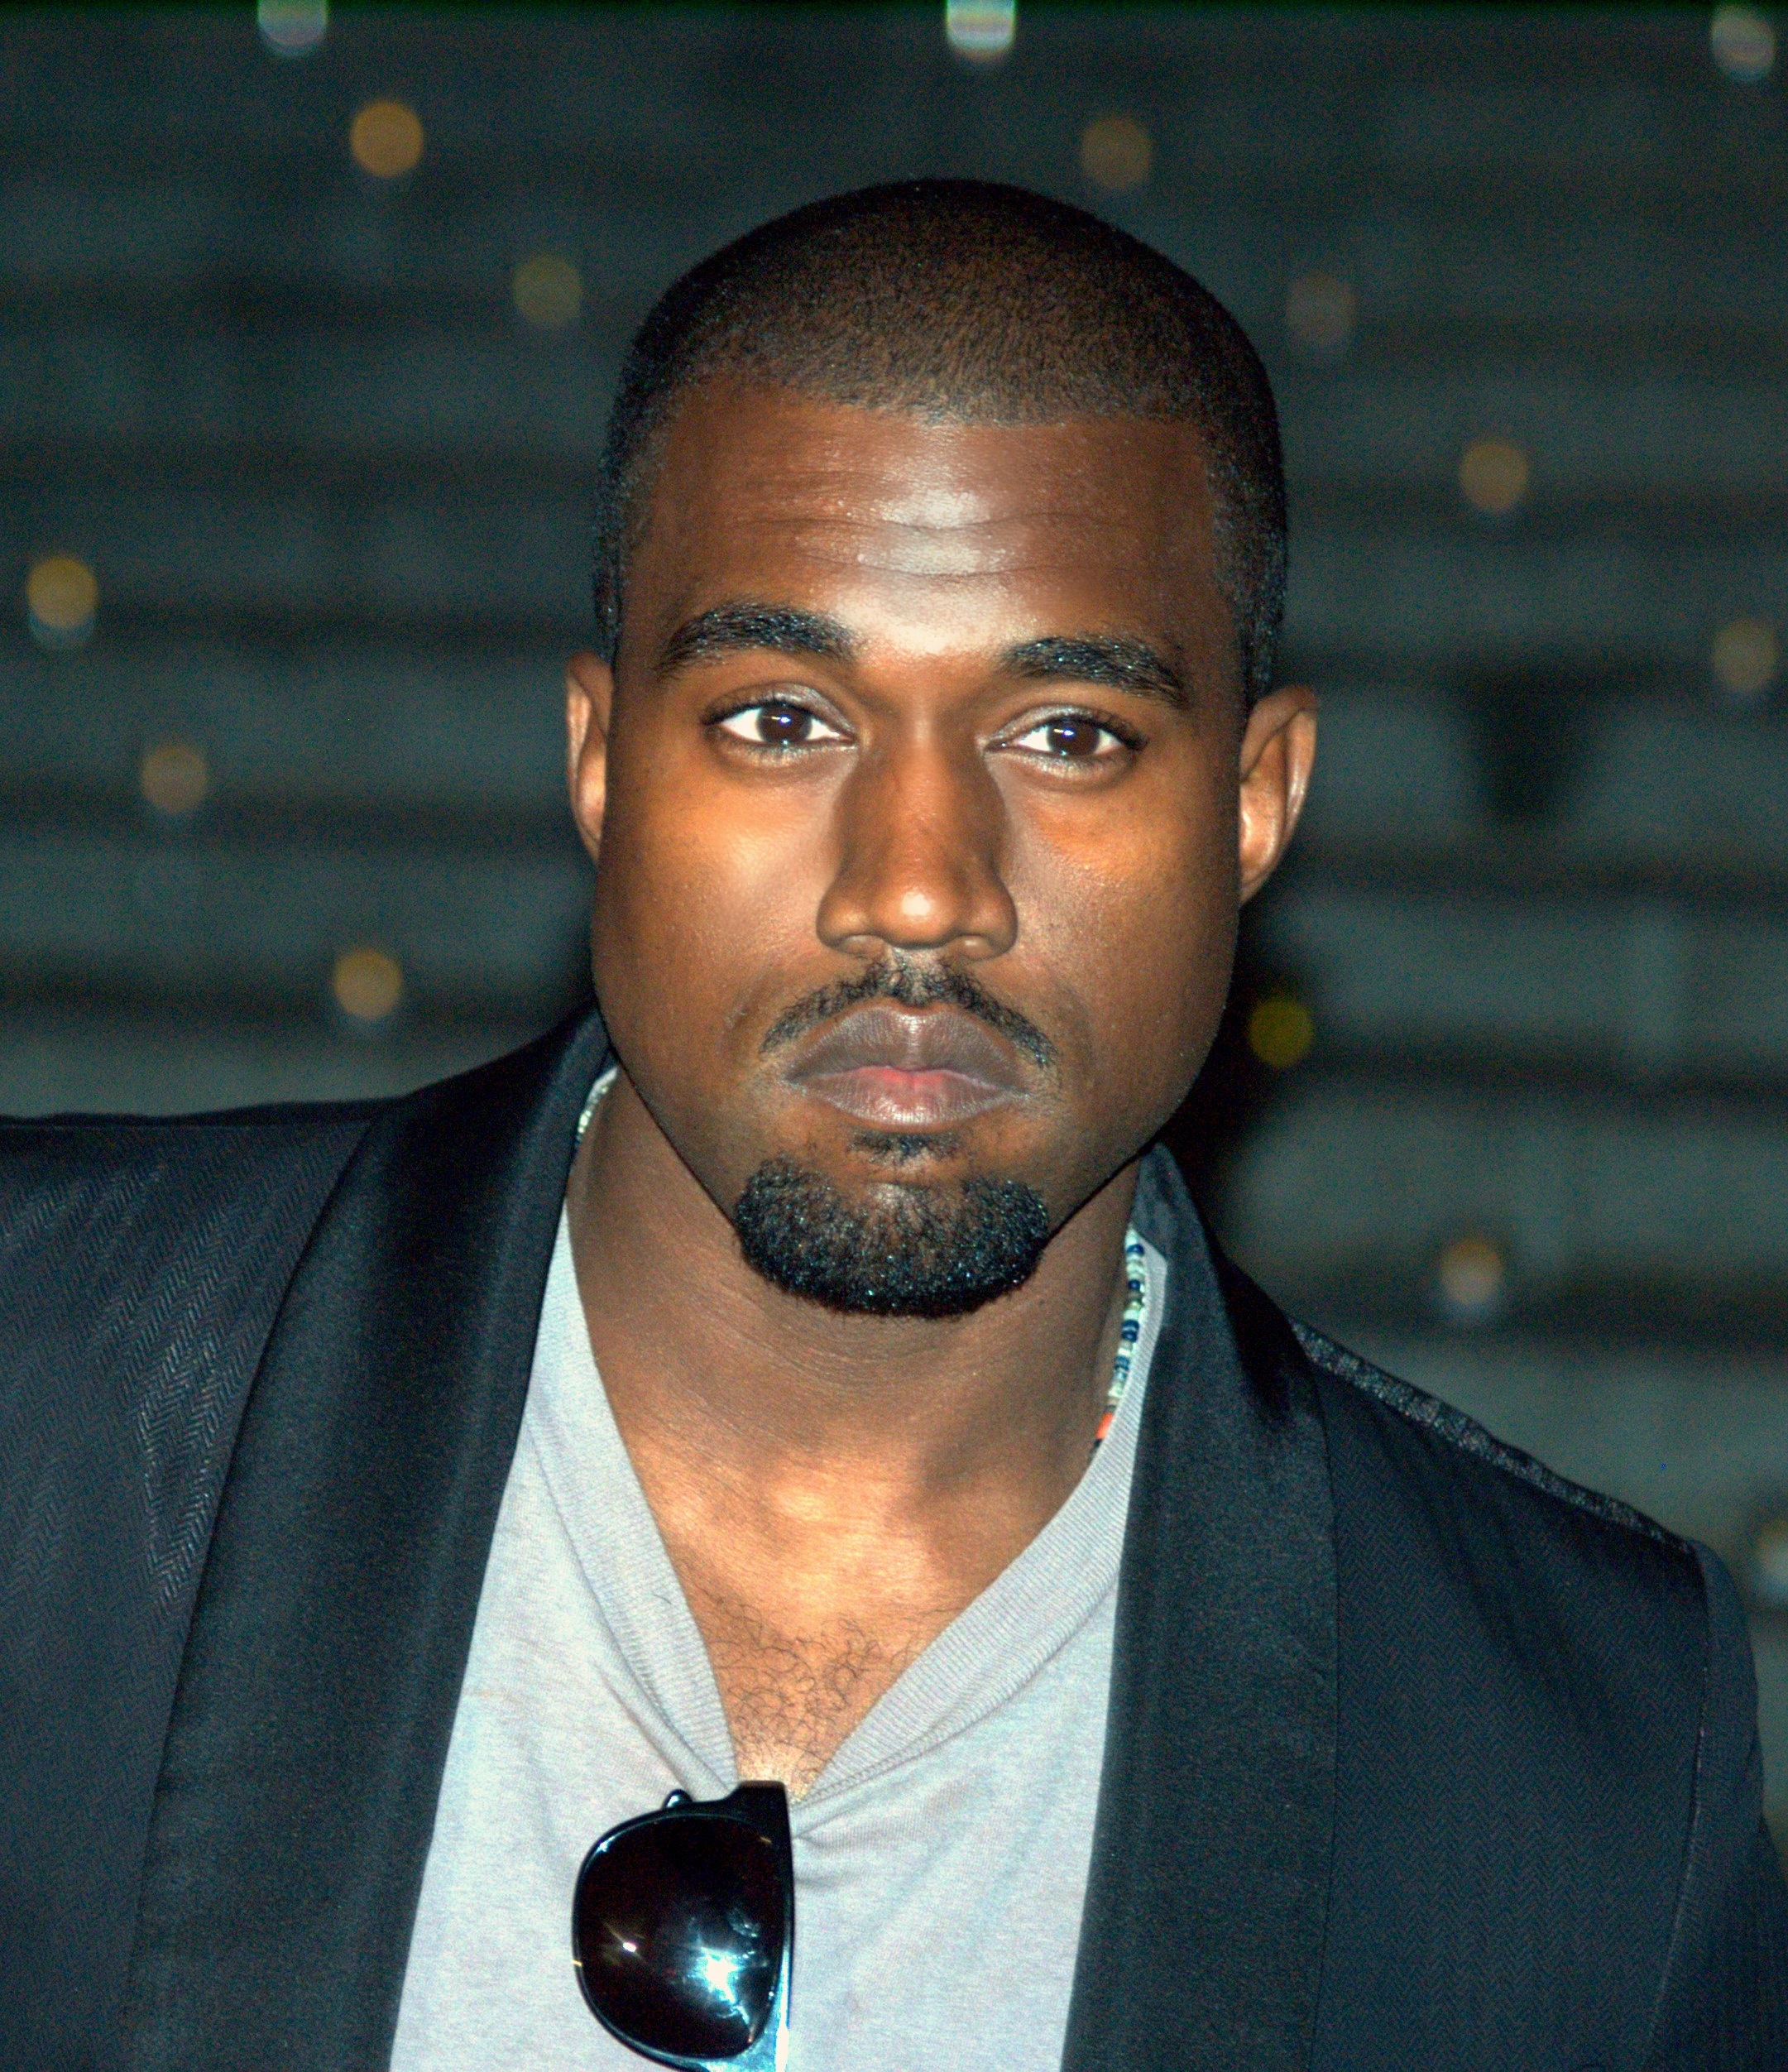 Kanye West (credit: David Shankbone via wikimedia)